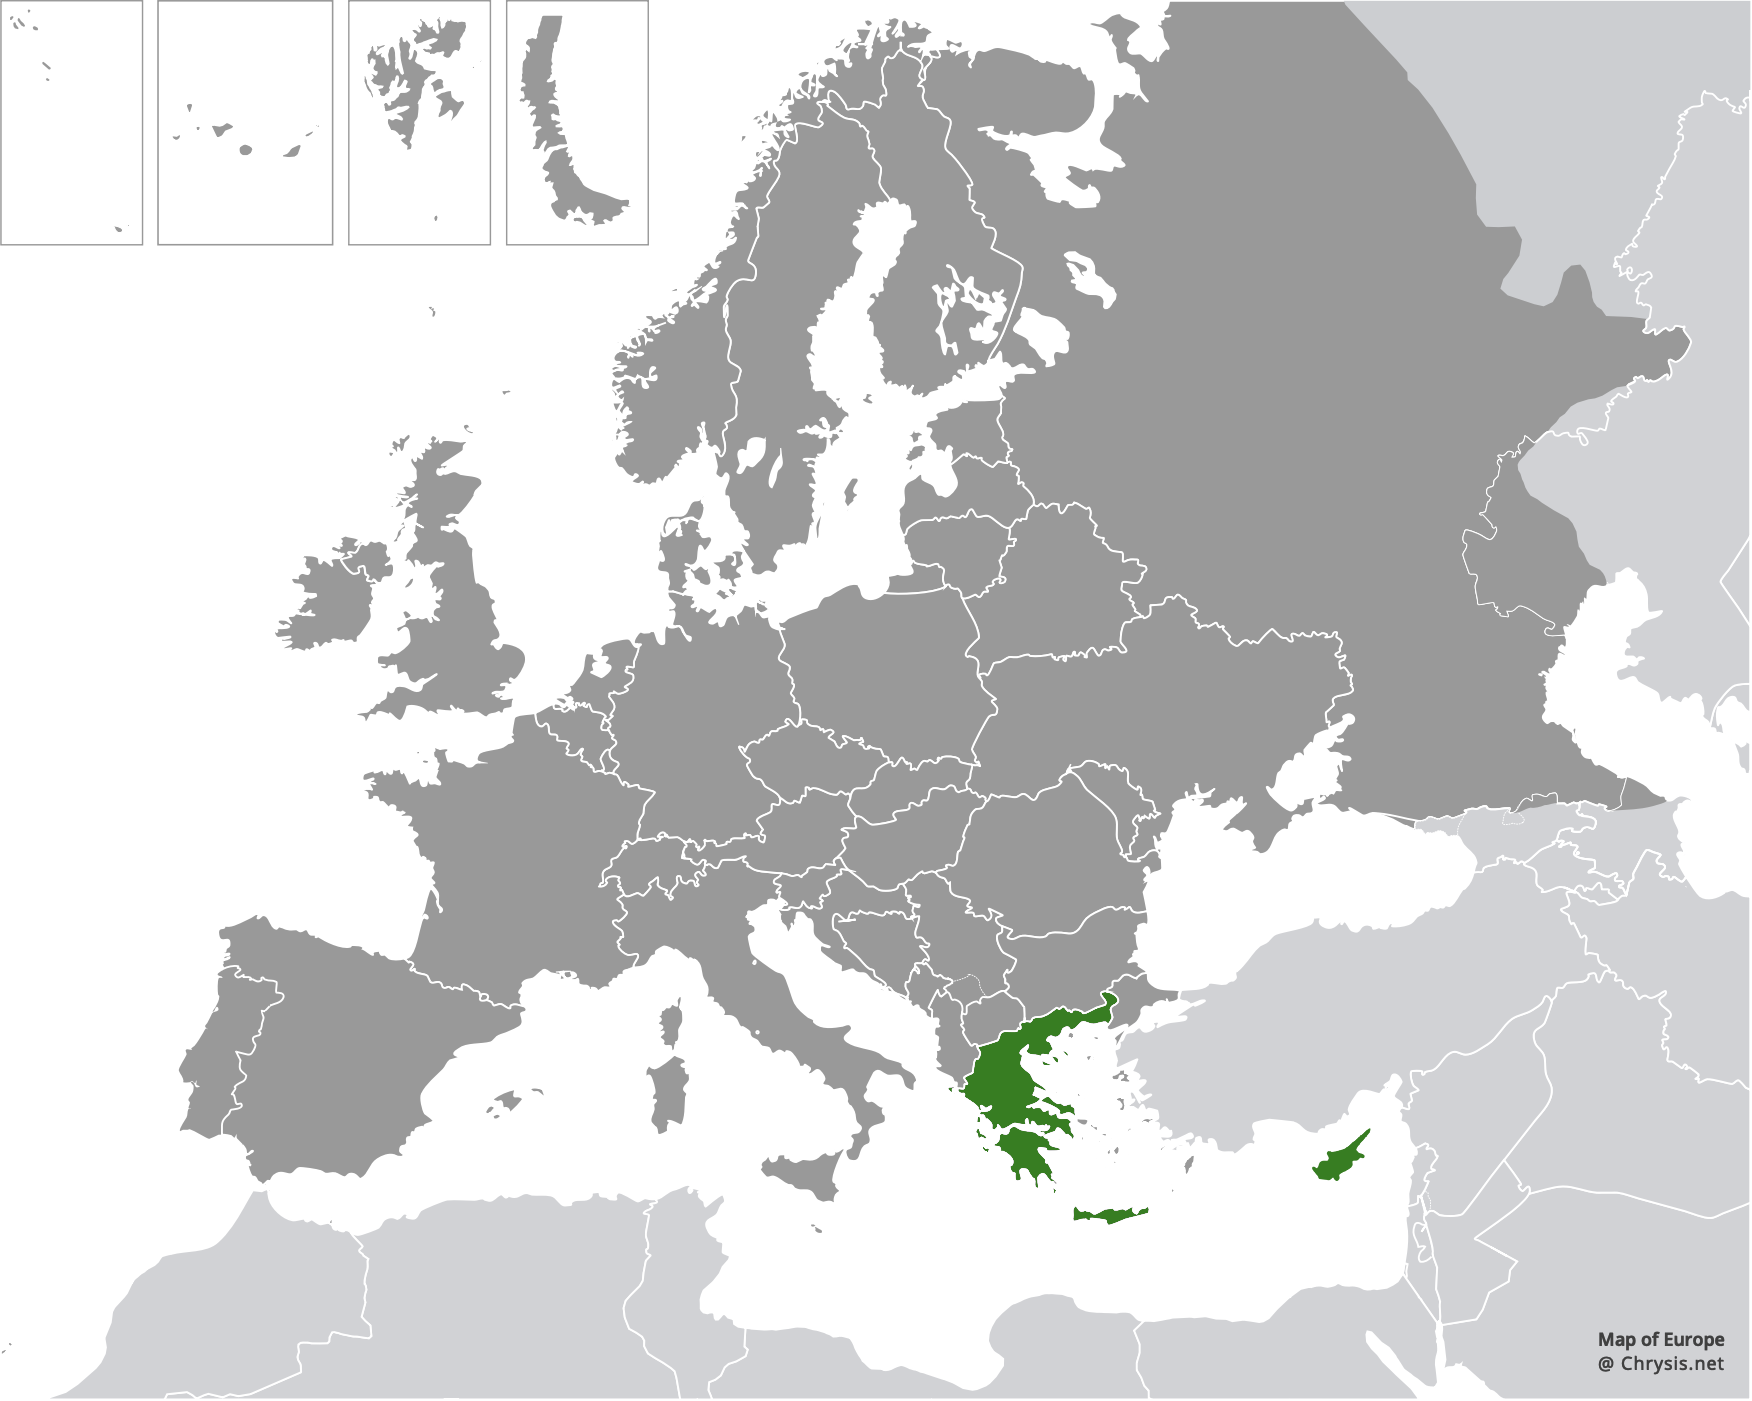 European distribution of Chrysis taurica